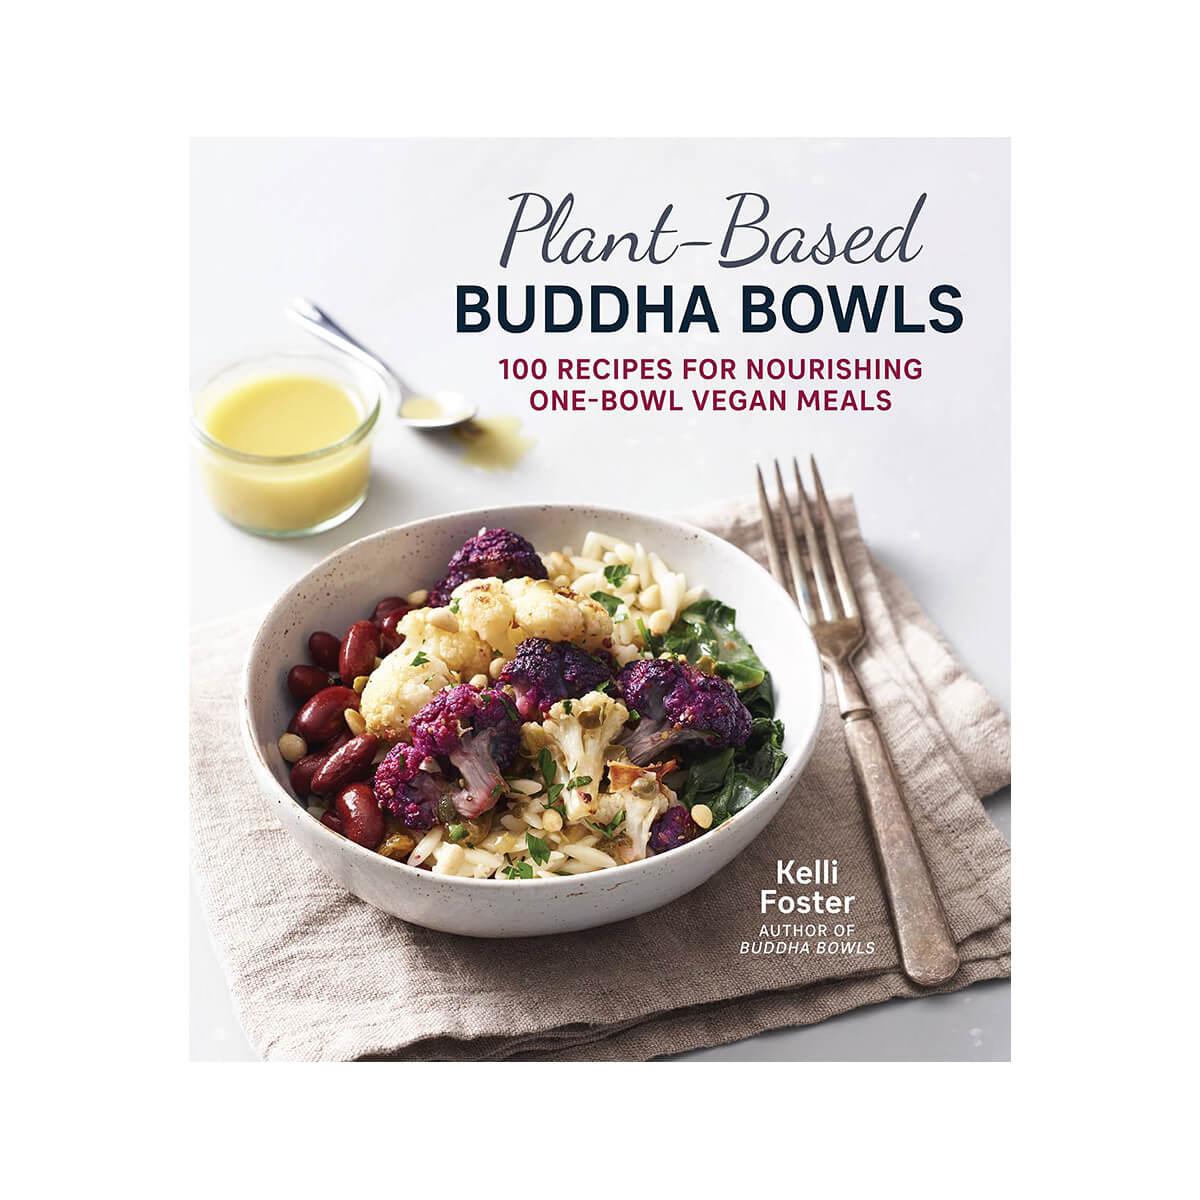  Plant- Based Buddha Bowls Cookbook